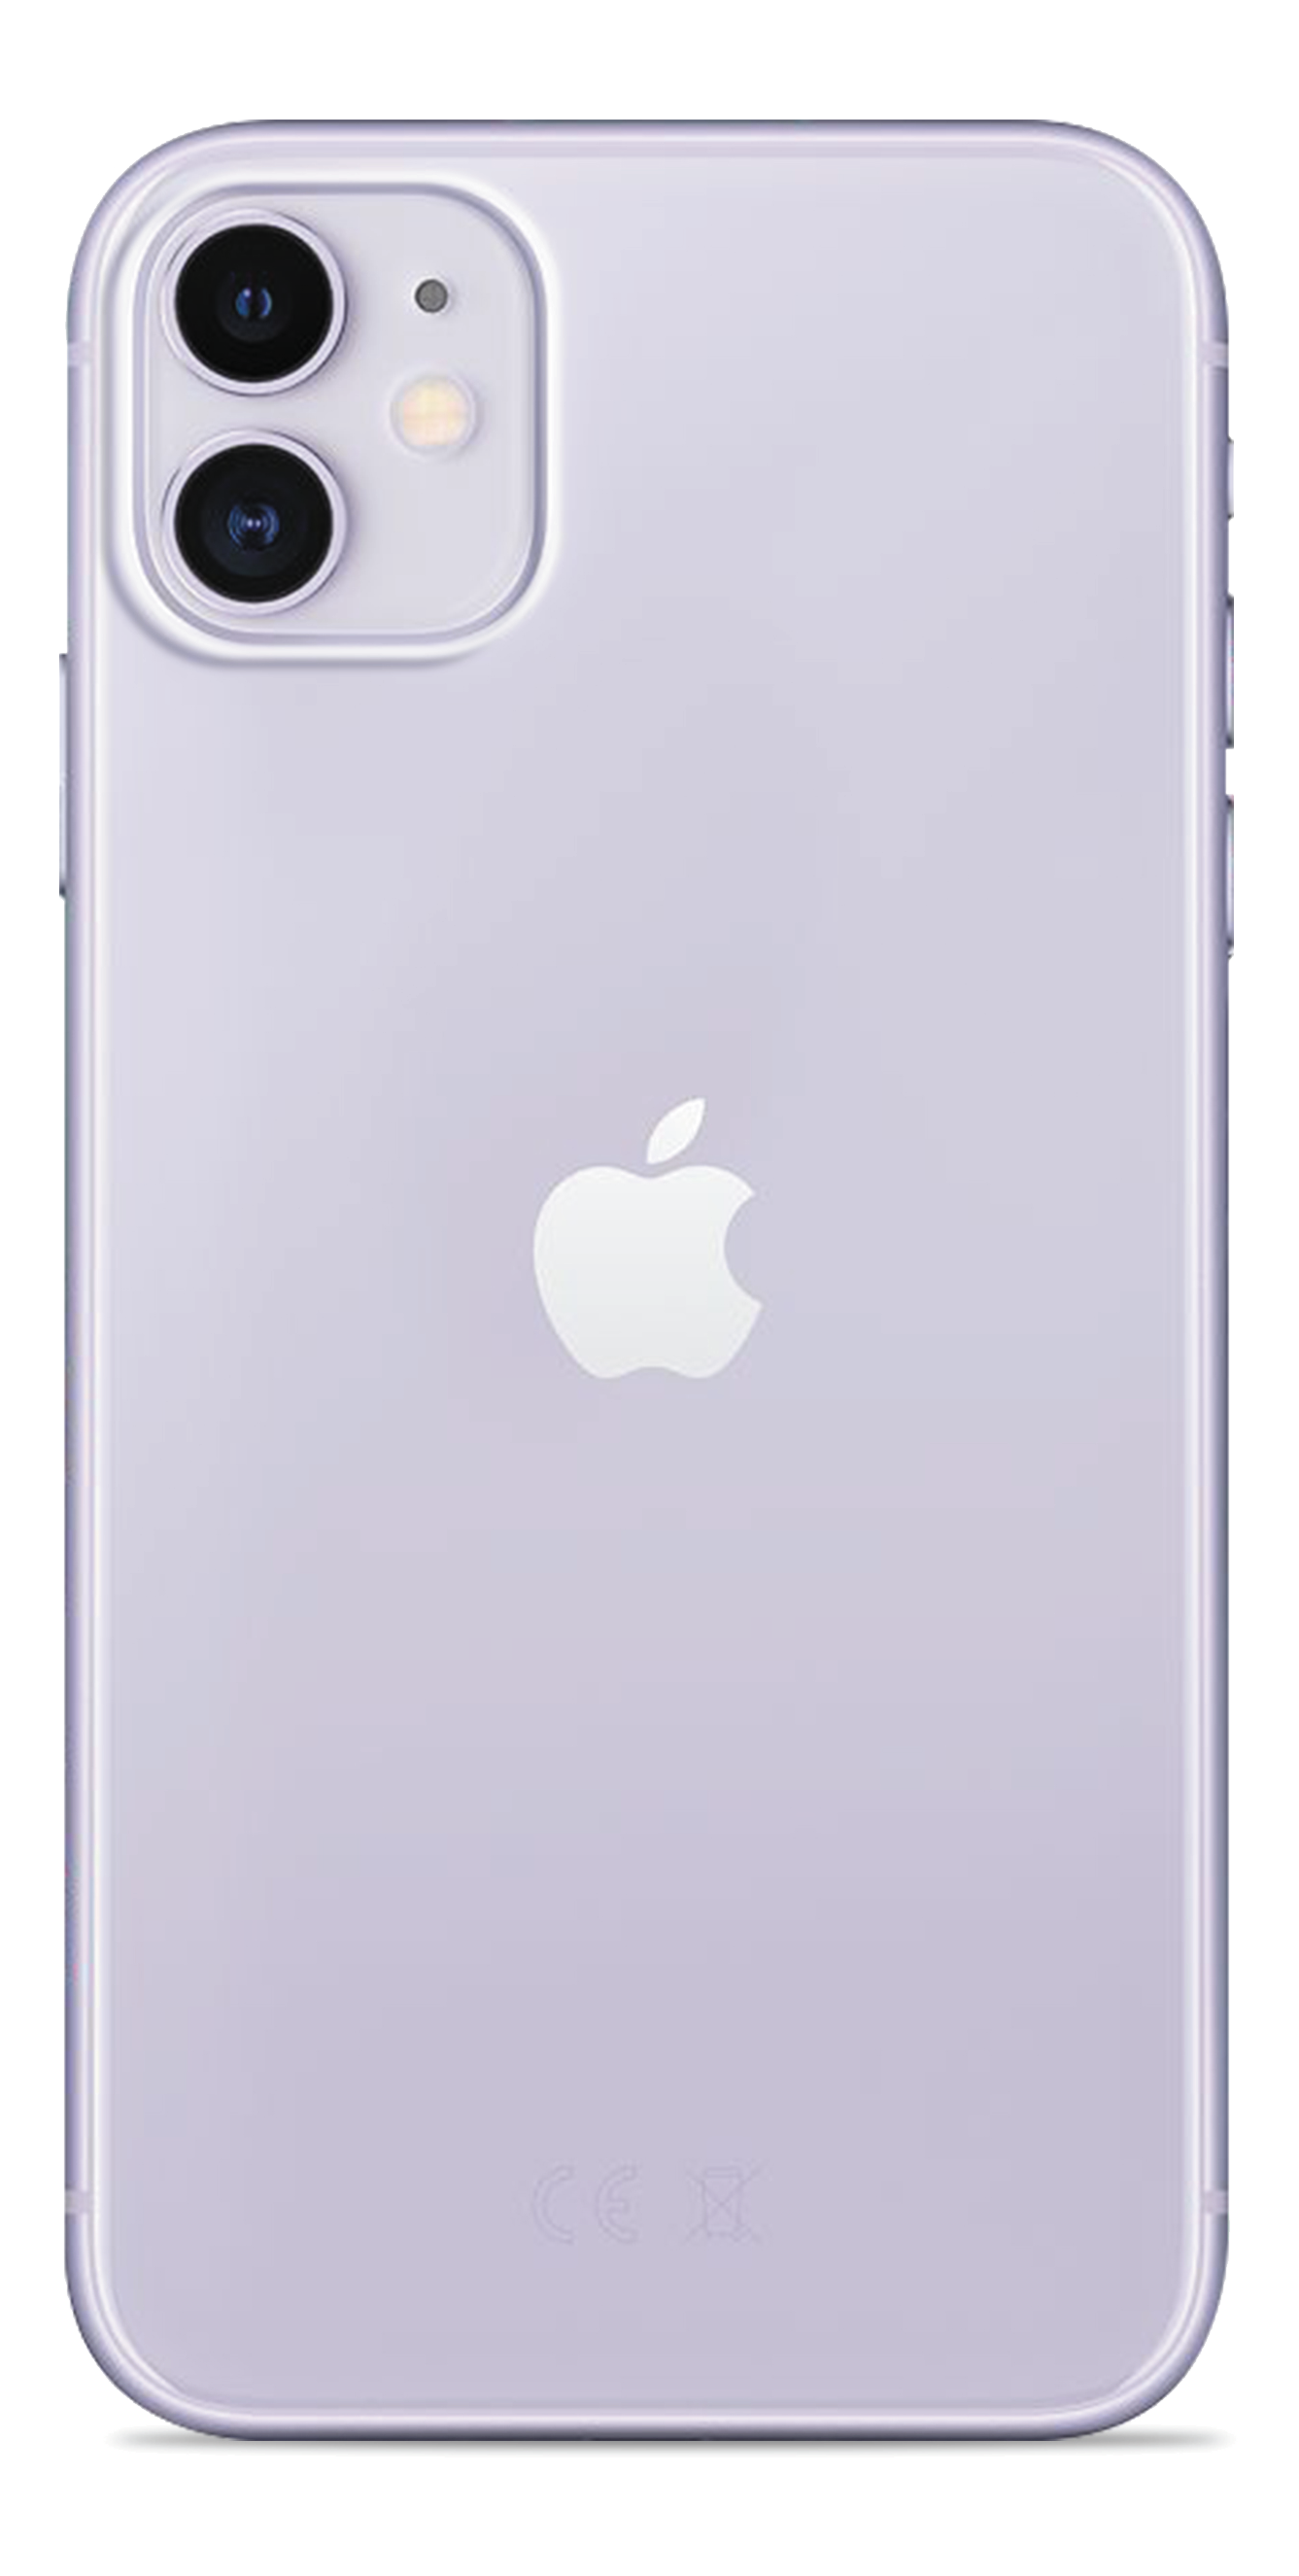 Case PURO 0.3 Nude for iPhone 11, transparent / IPCX611903NUDETR 